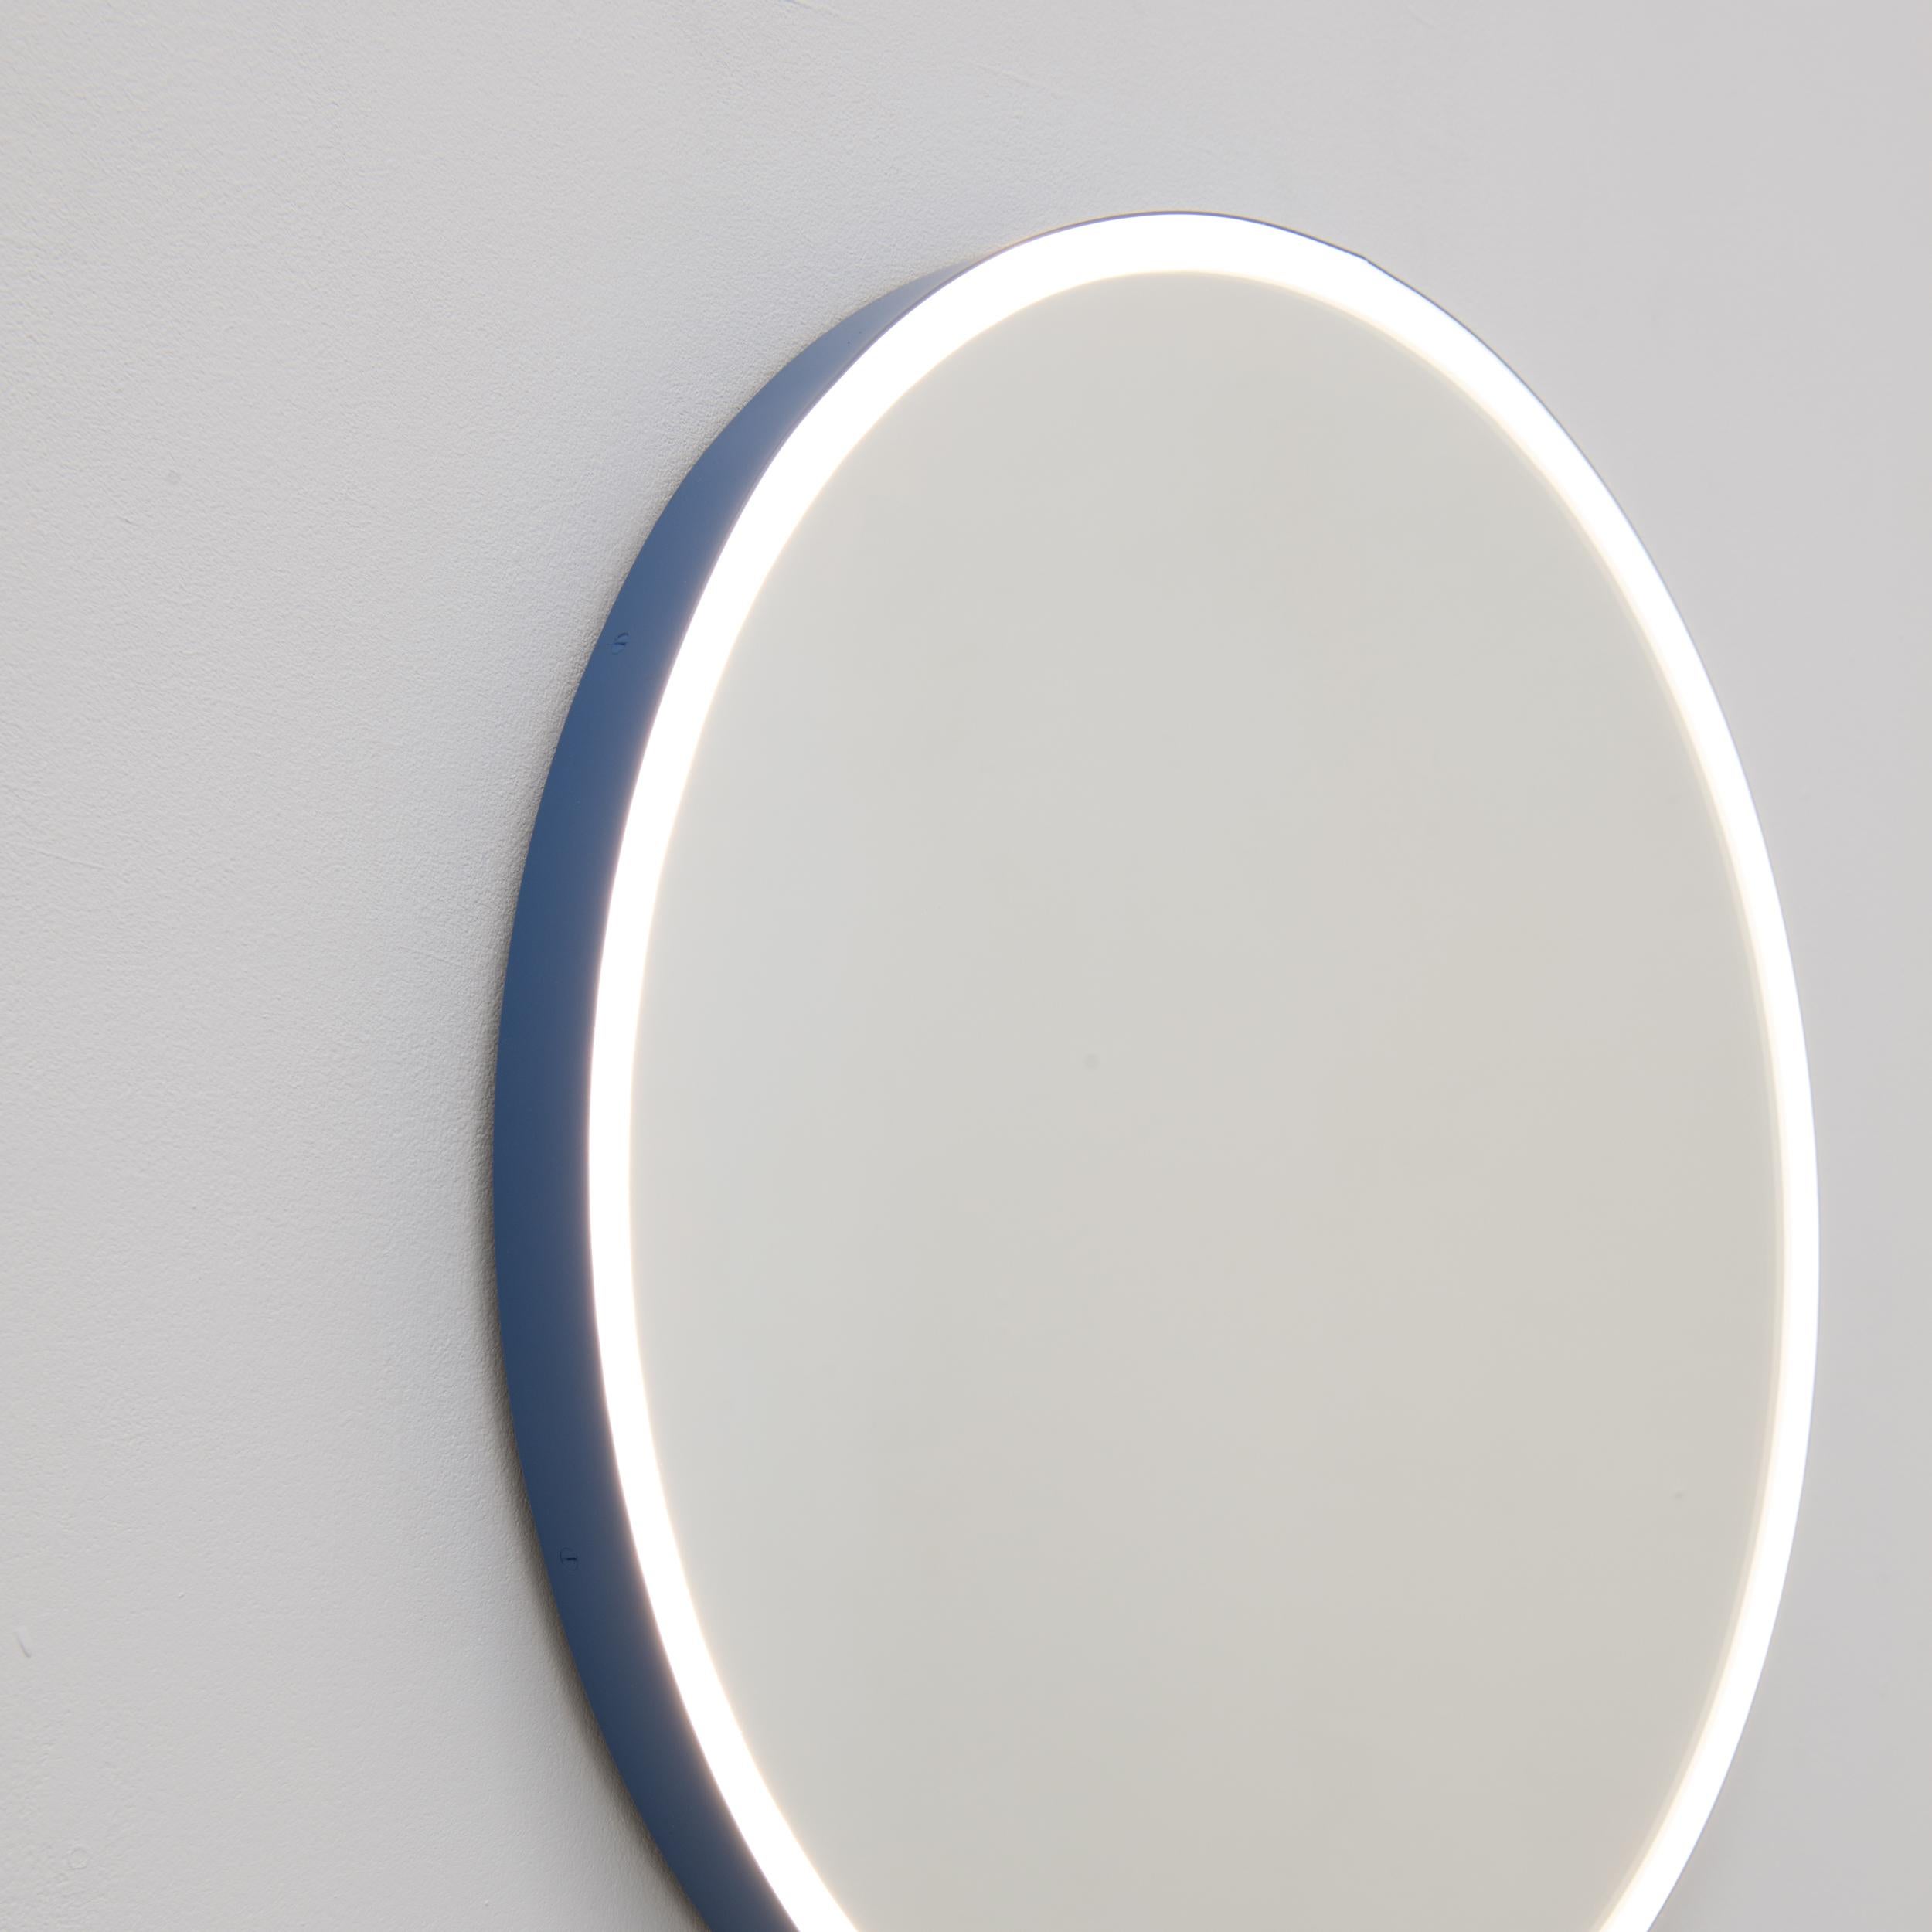 Organique Orbis Front Illuminated Circular Modern Contemporary Mirror with Blue Frame, XL (miroir circulaire contemporain éclairé par l'avant avec cadre bleu) en vente